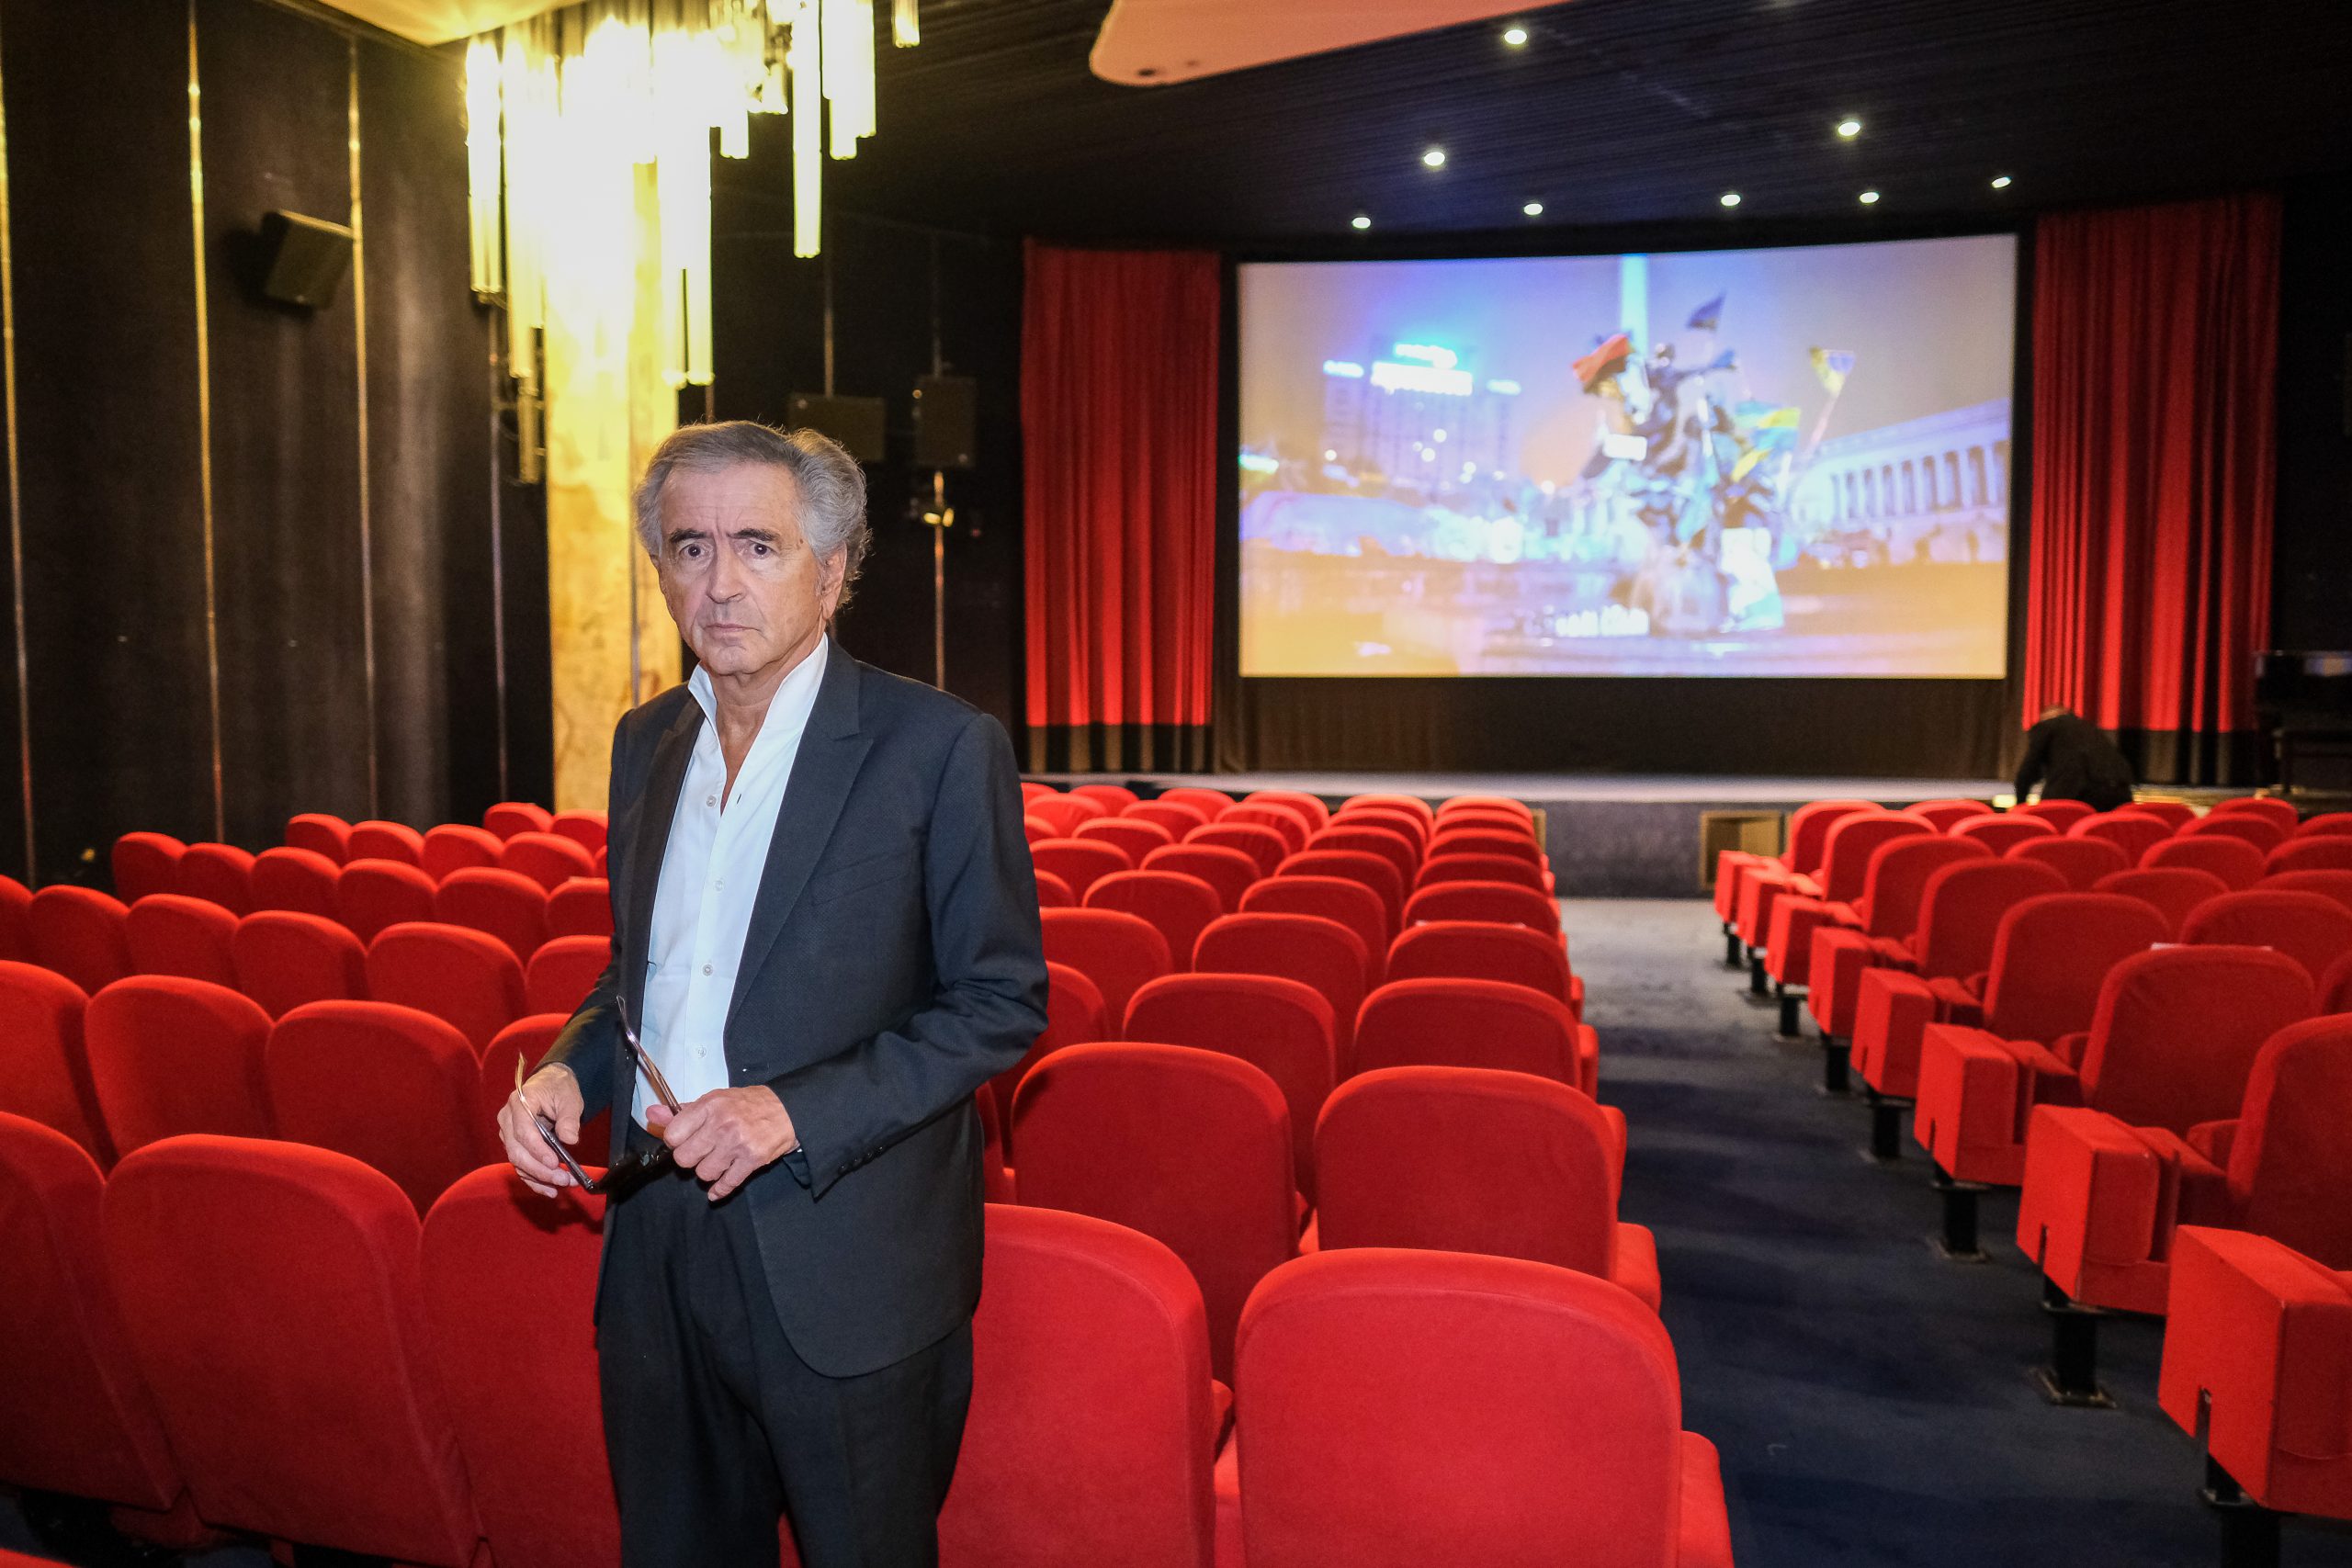 Bernard-Henri Lévy before the screening of his film "Why Ukraine", at the Cinema Le Balzac in Paris.